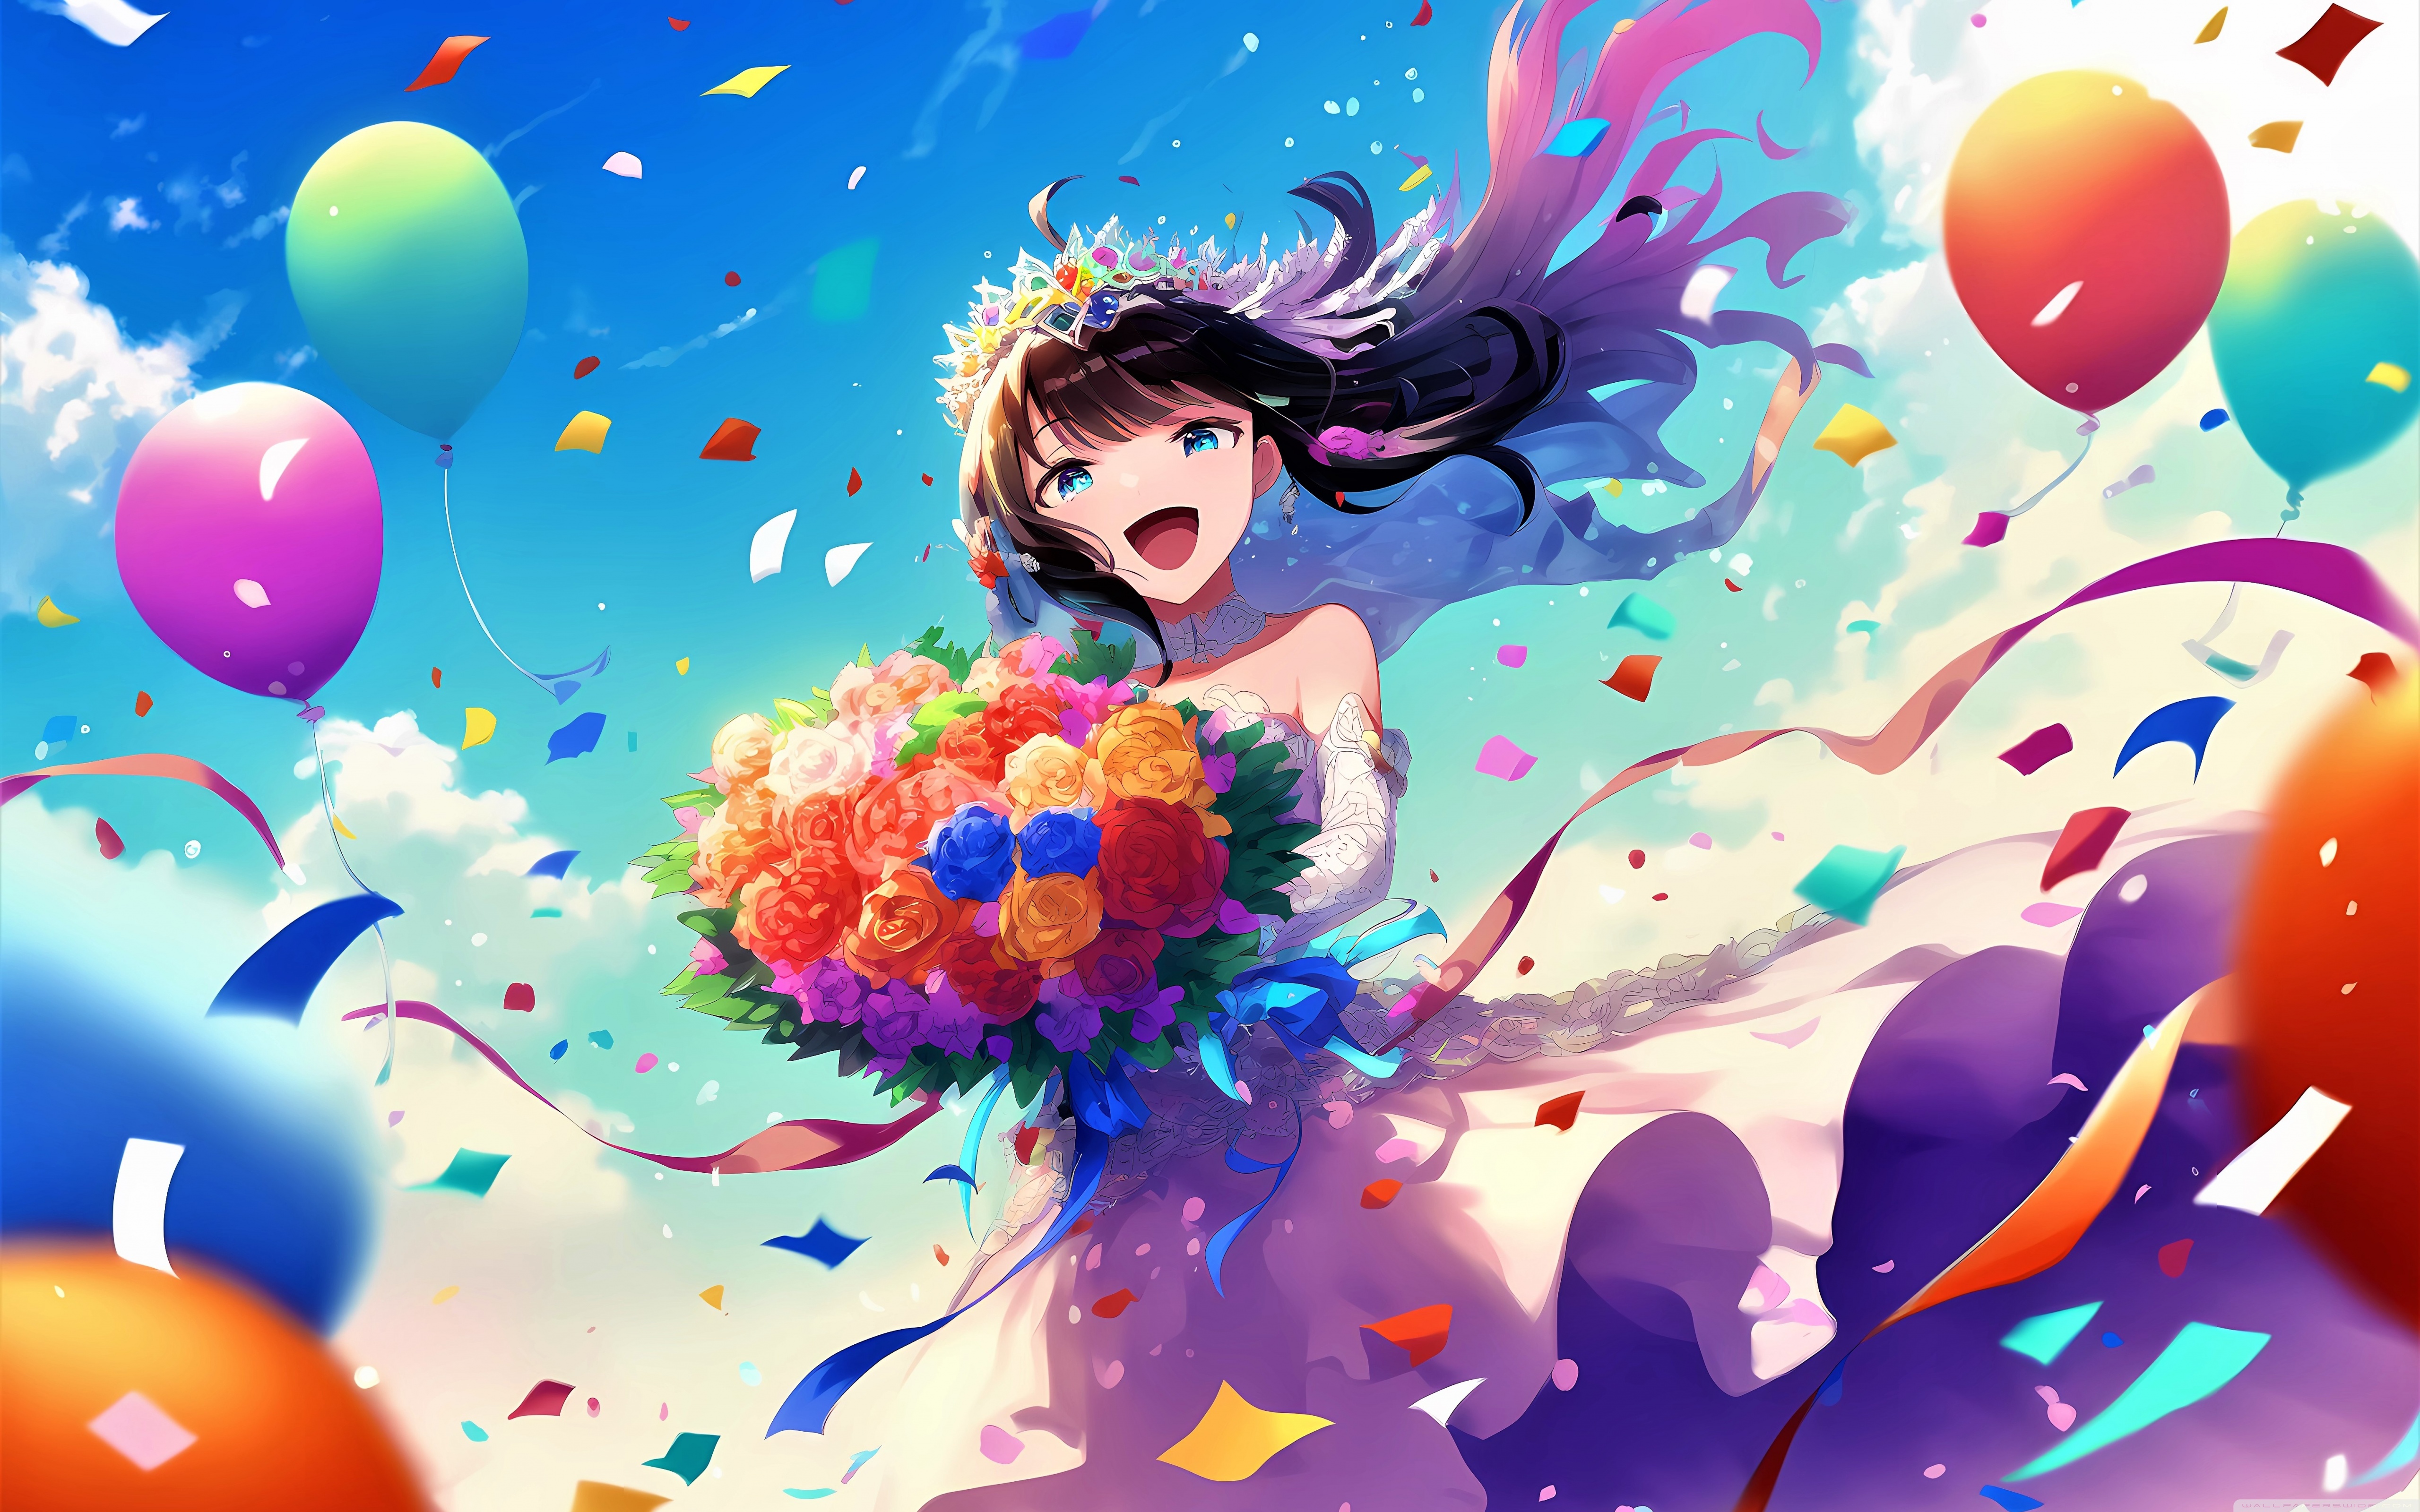 Download wallpaper 1920x1080 girl, smile, jump, flight, bag, anime full hd,  hdtv, fhd, 1080p hd background